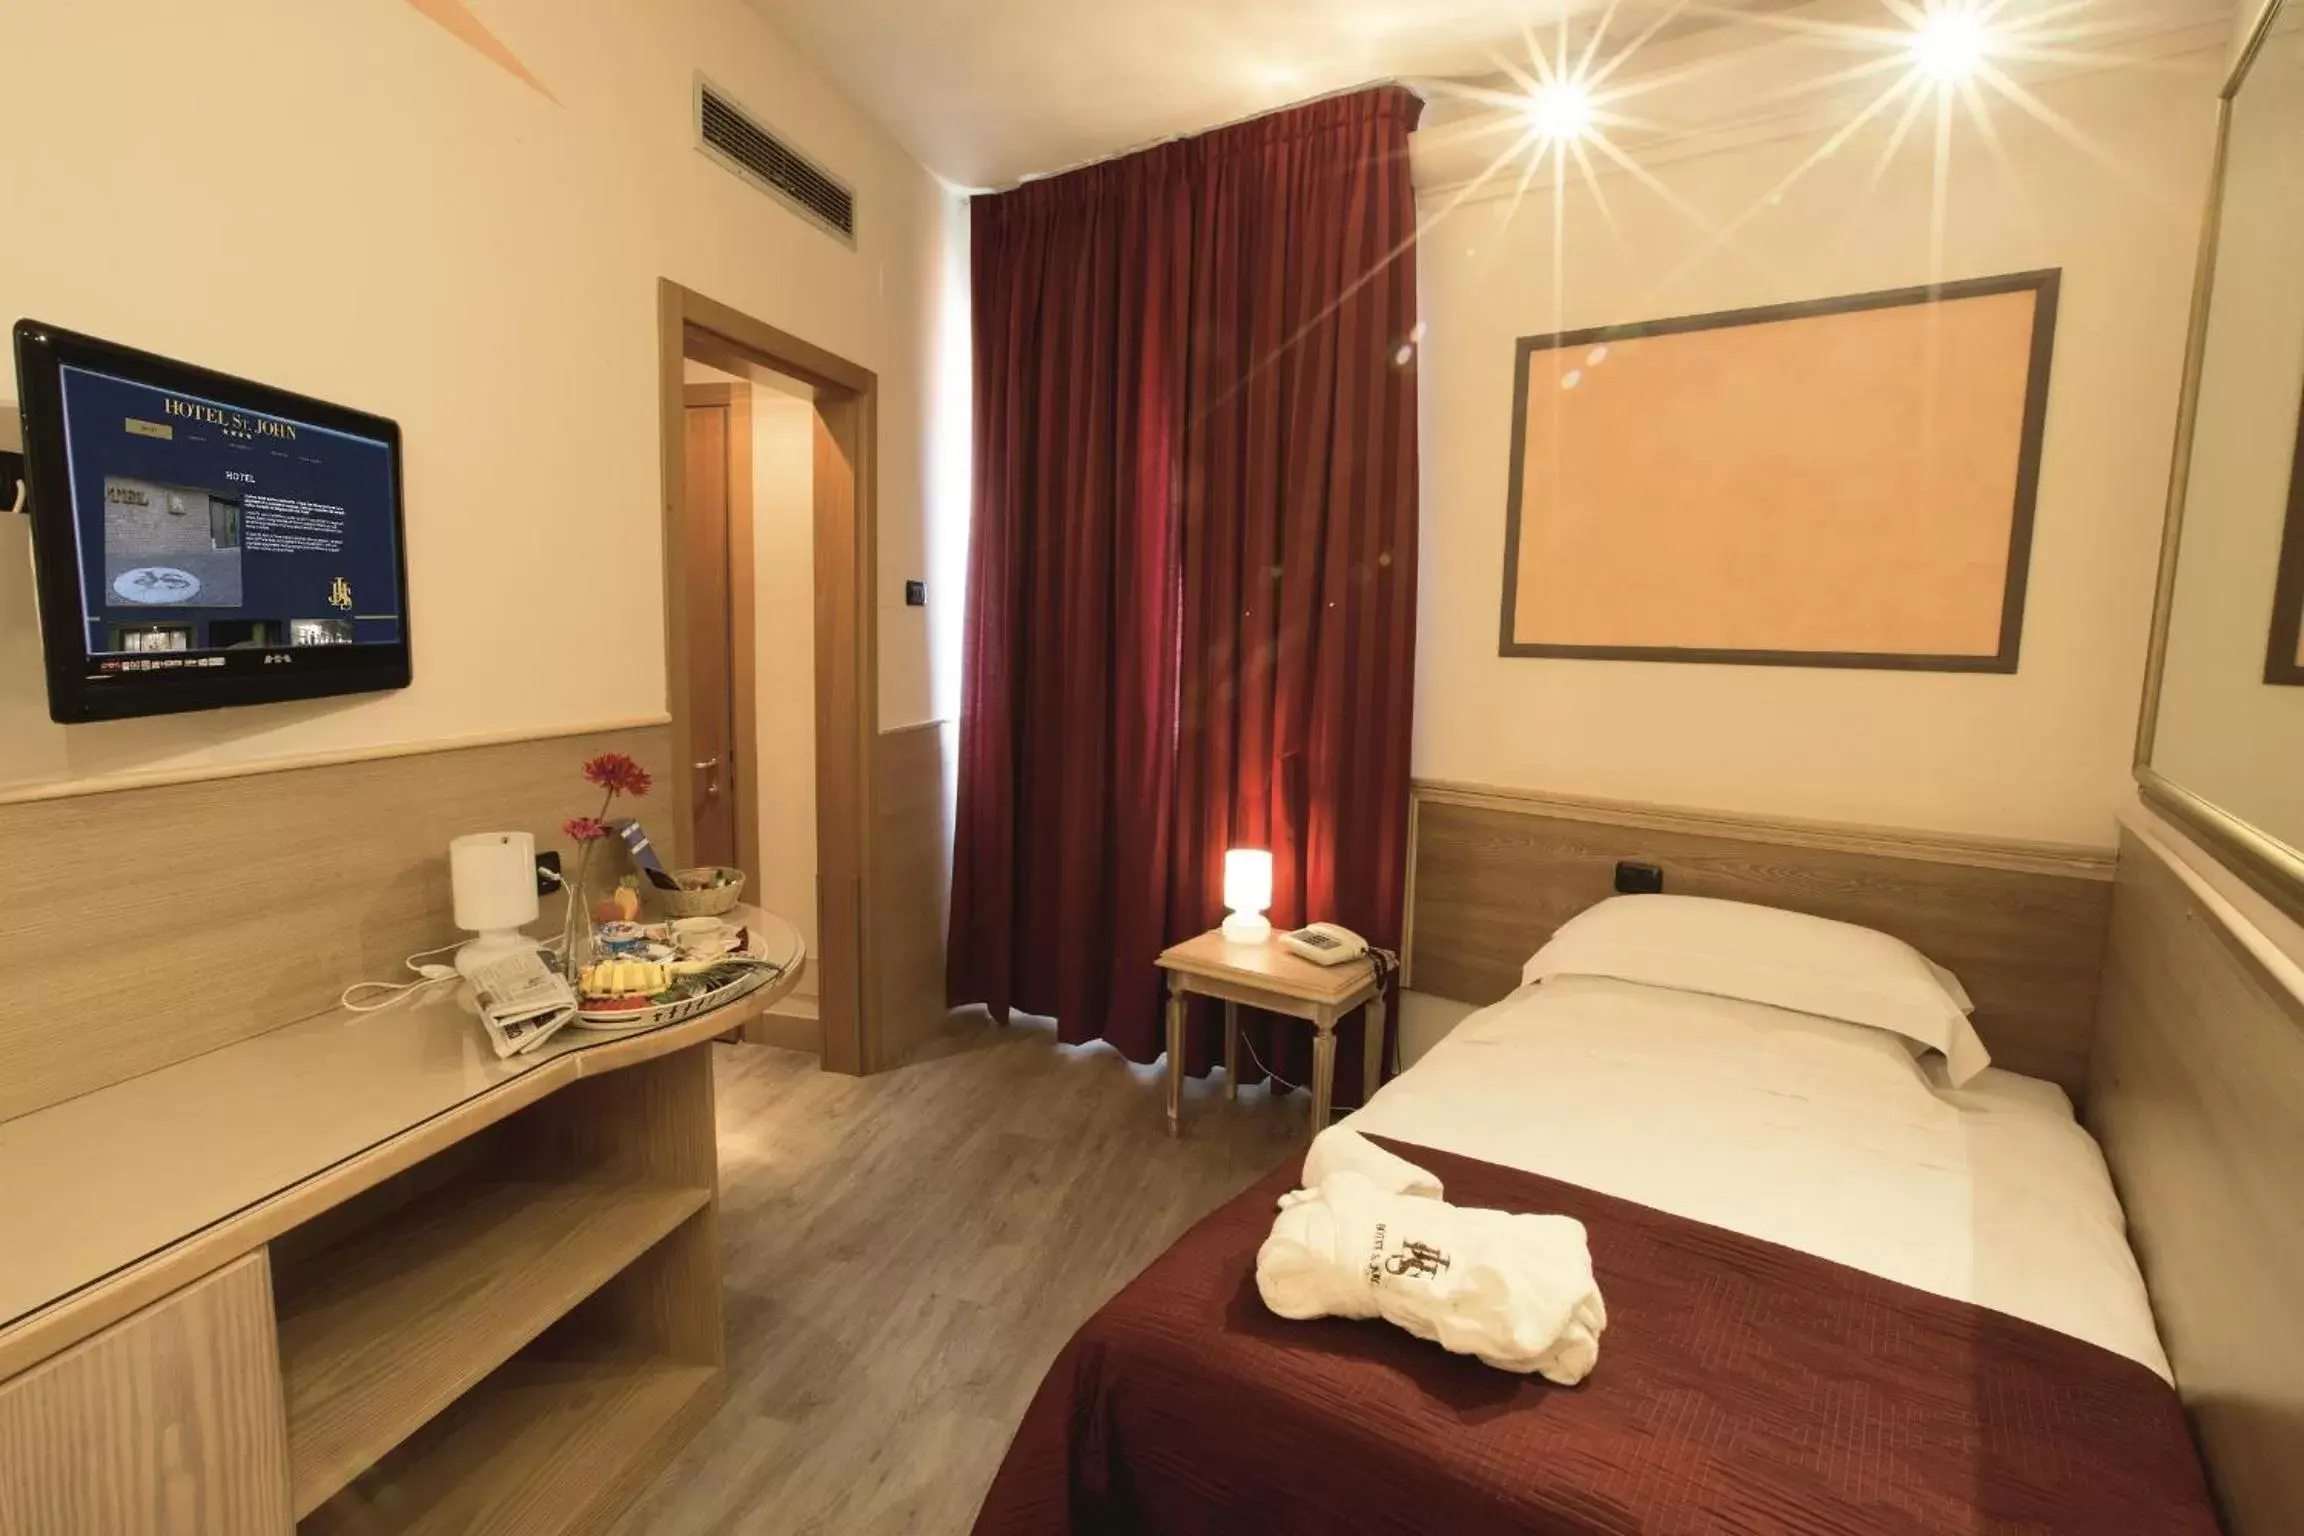 Bed, Room Photo in iH Hotels Milano St. John